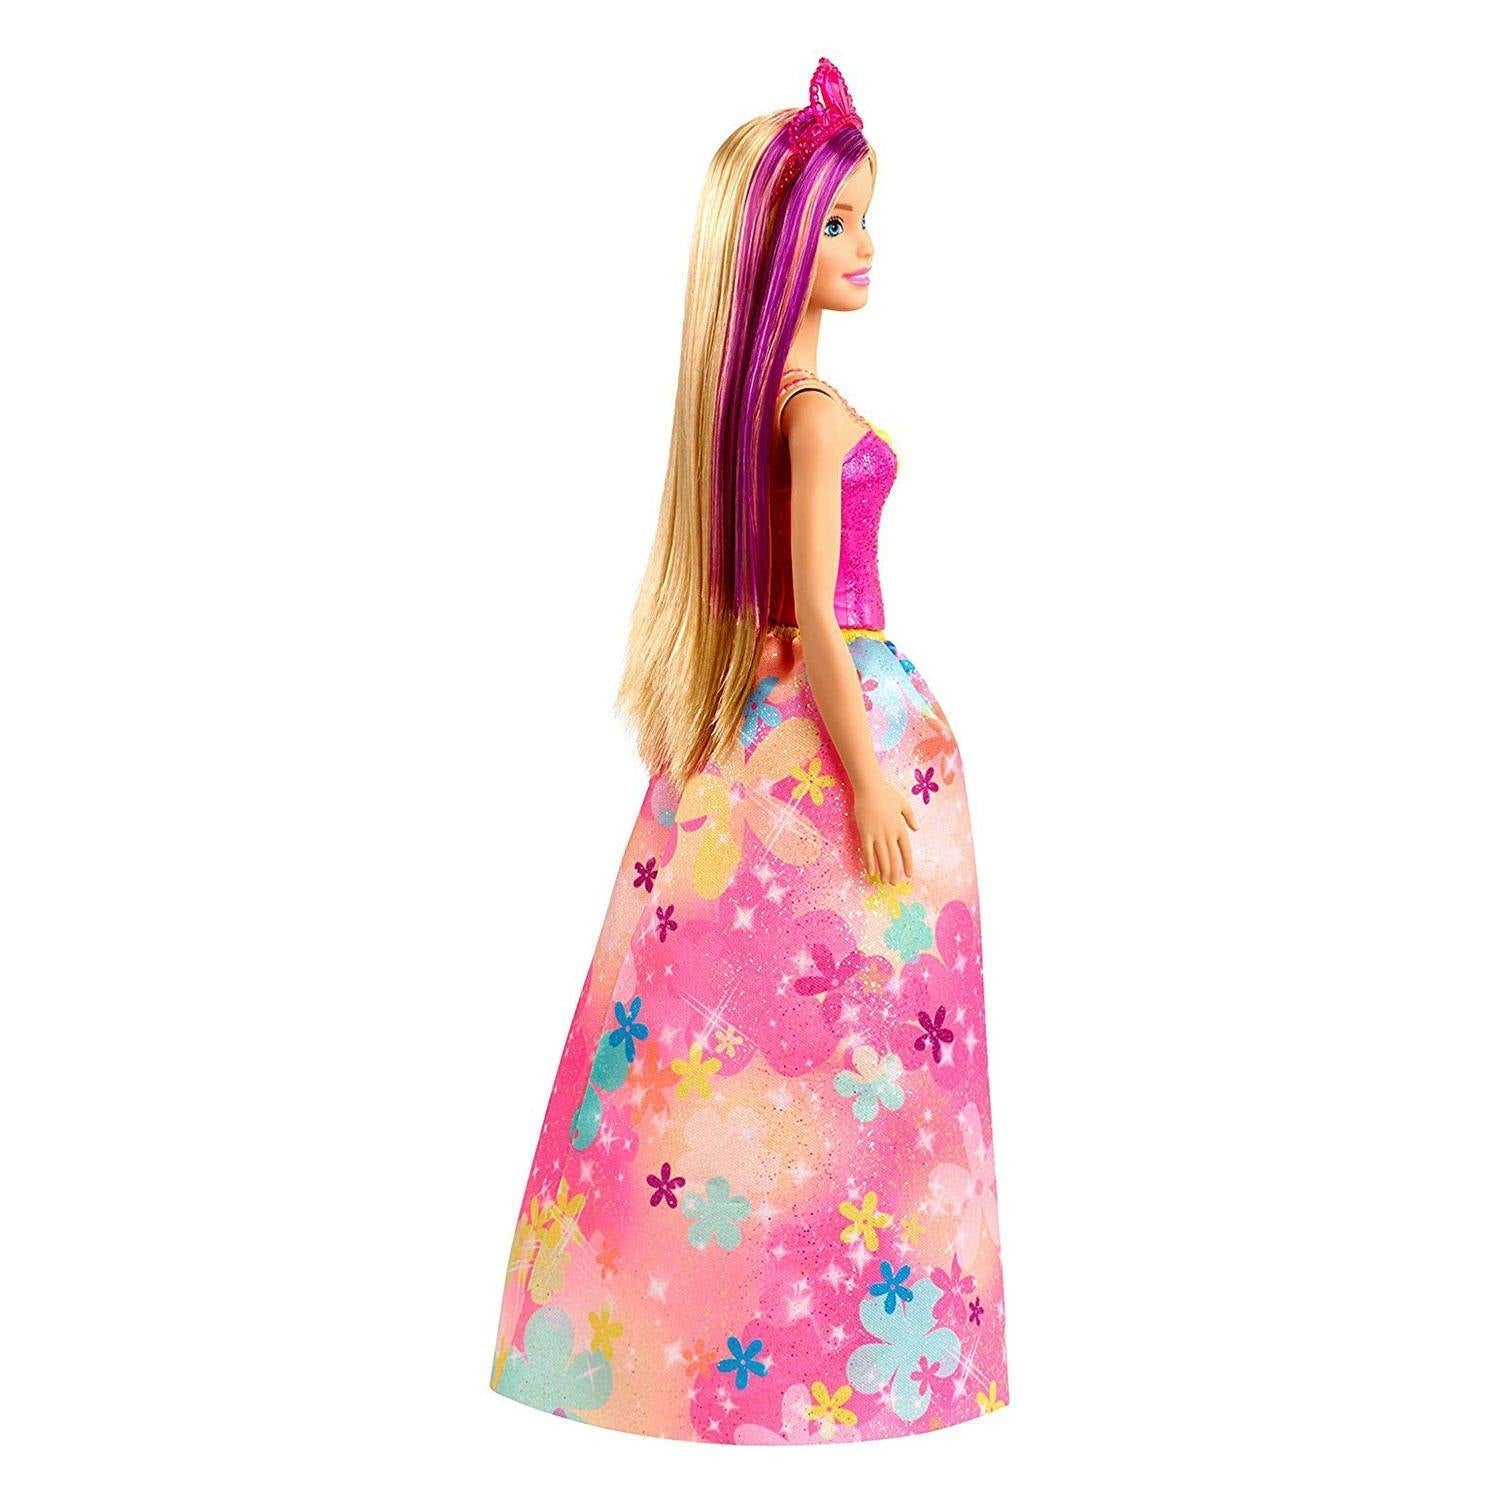 Barbie Dreamtopia Princess Blonde and Purple Hair Doll